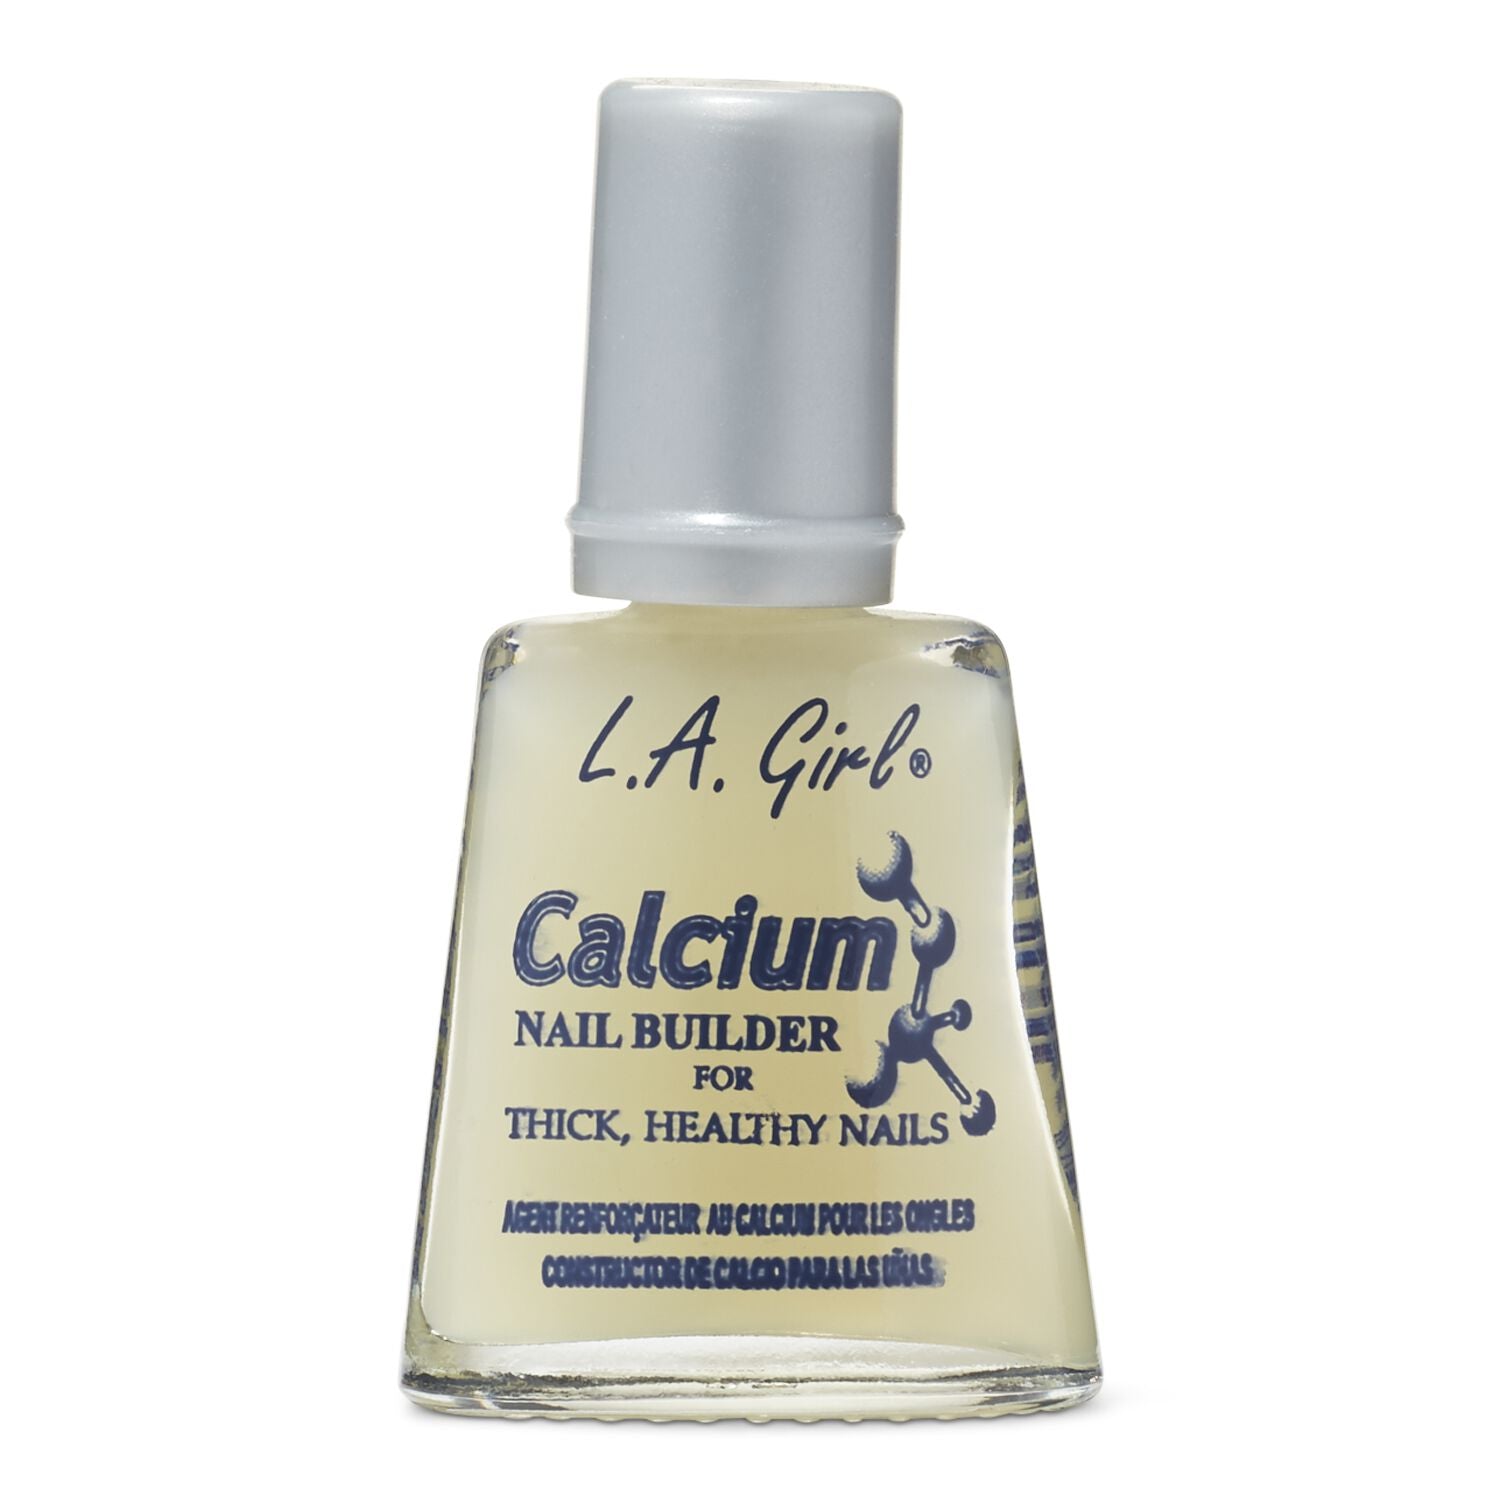 LA Girl Calcium Nail Build